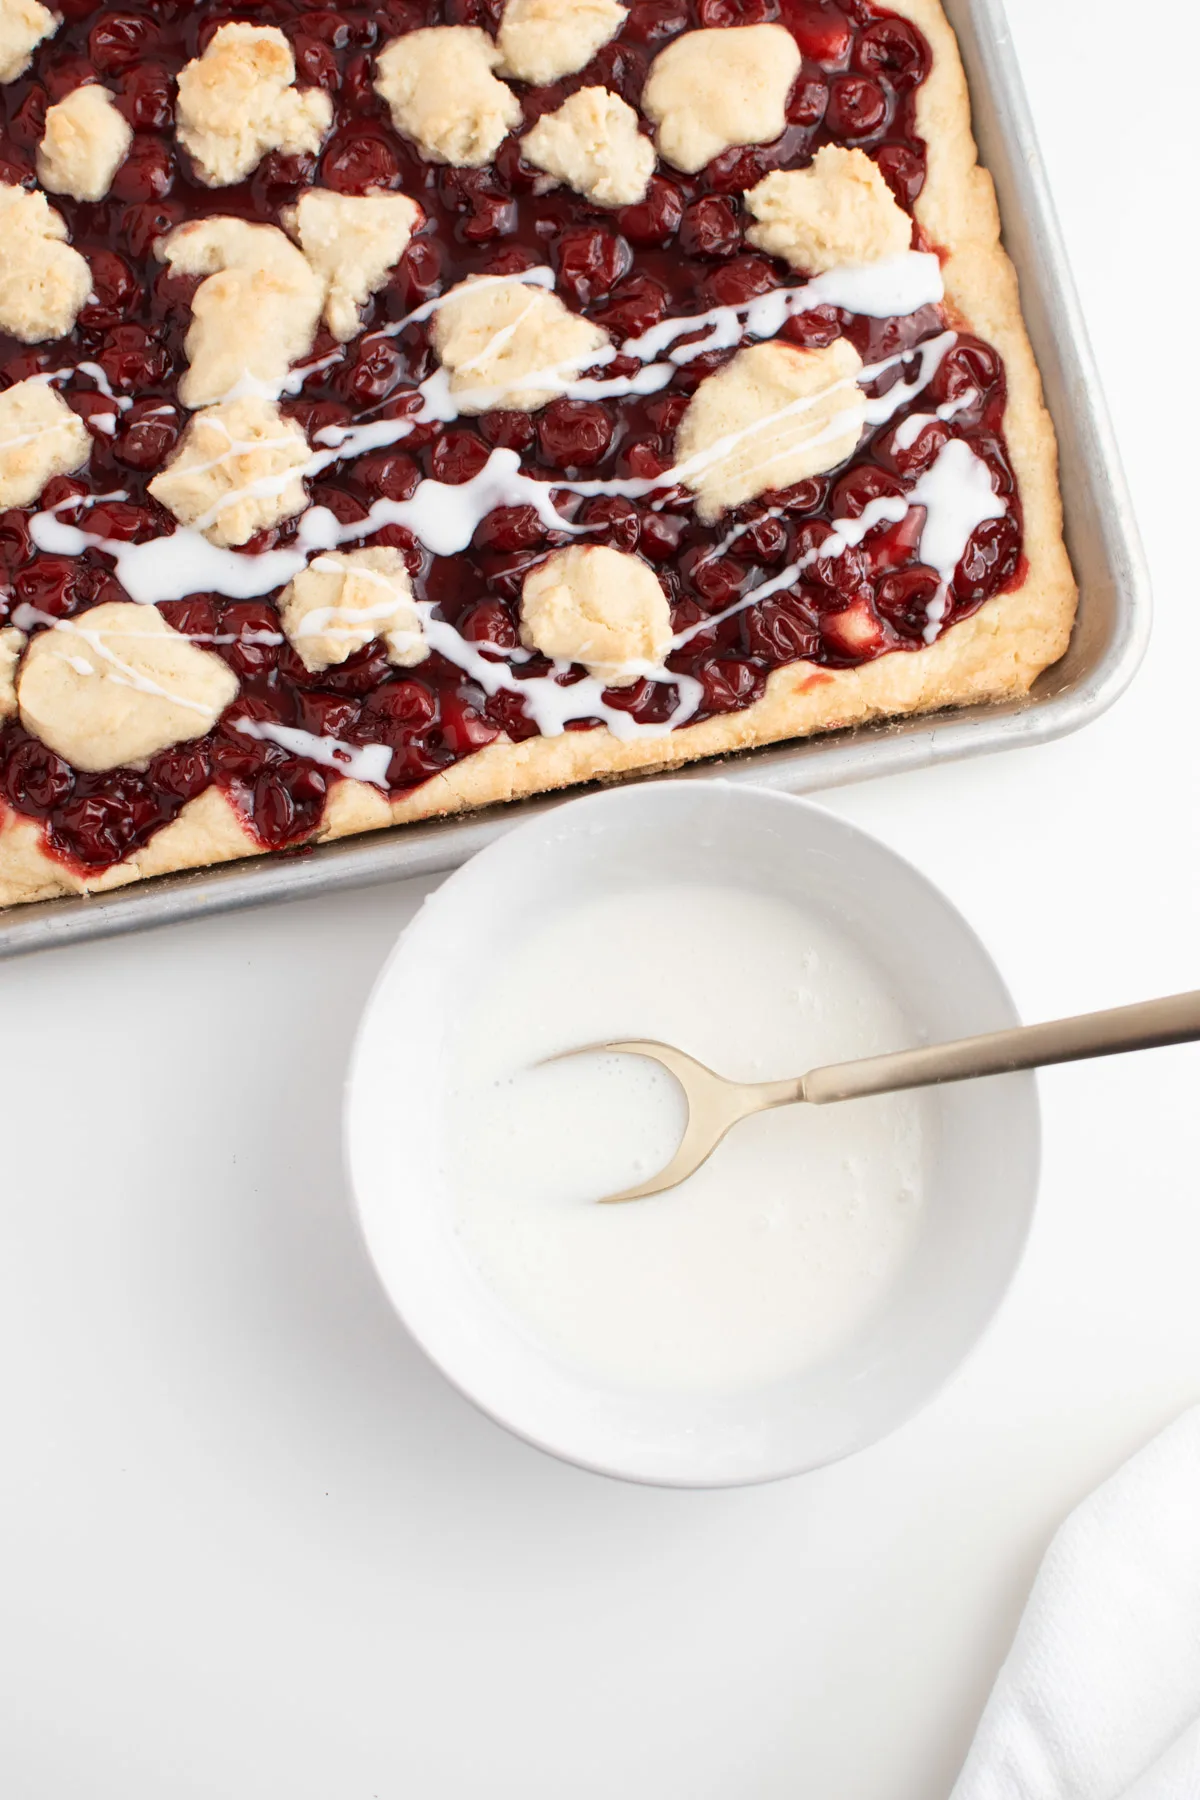 Powdered sugar glaze in white bowl next to sheet pan pie with cherries.